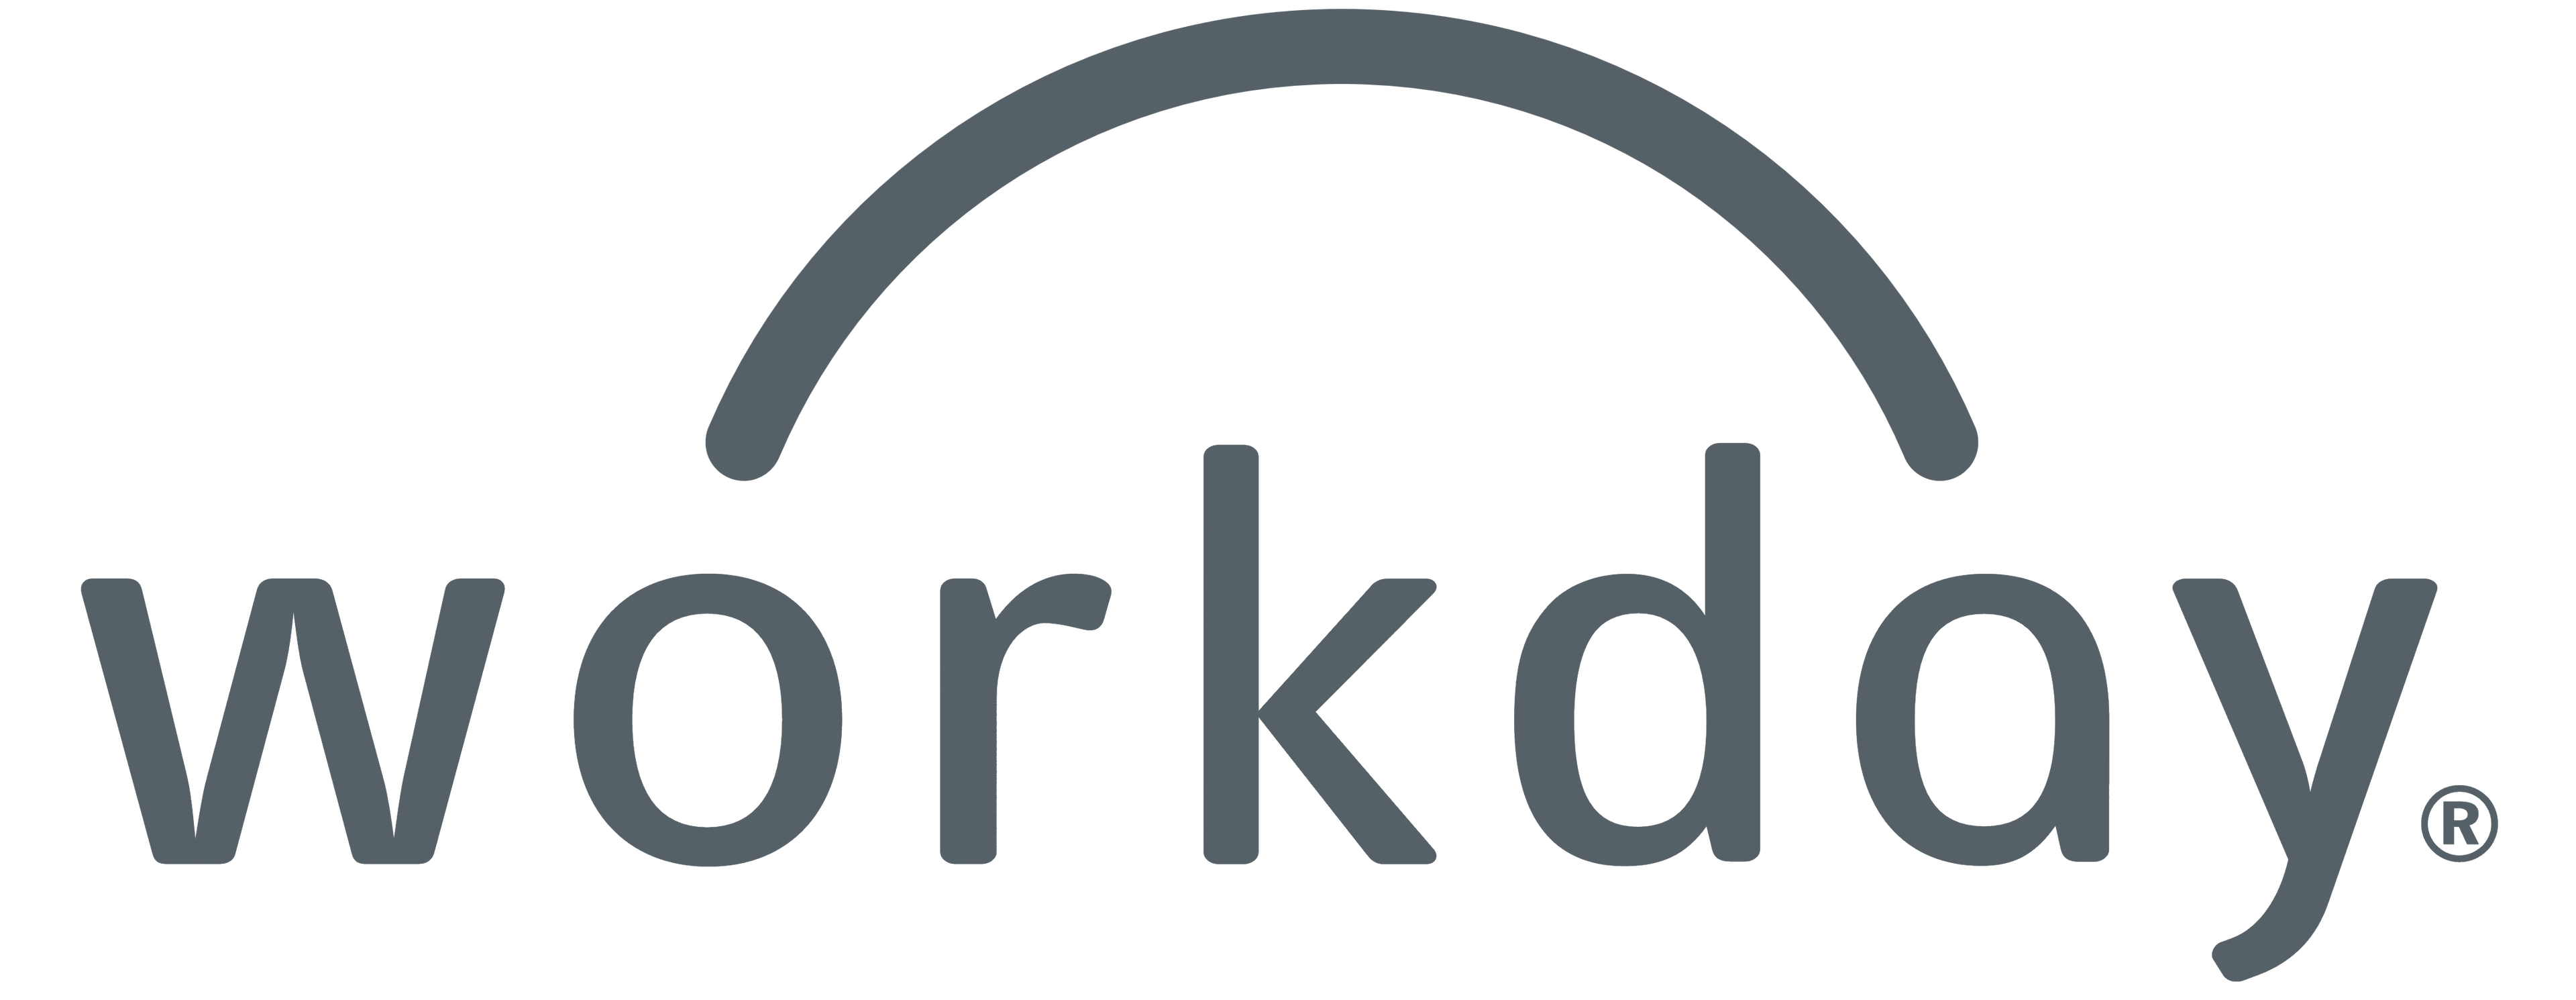 Workday_Logo-gray